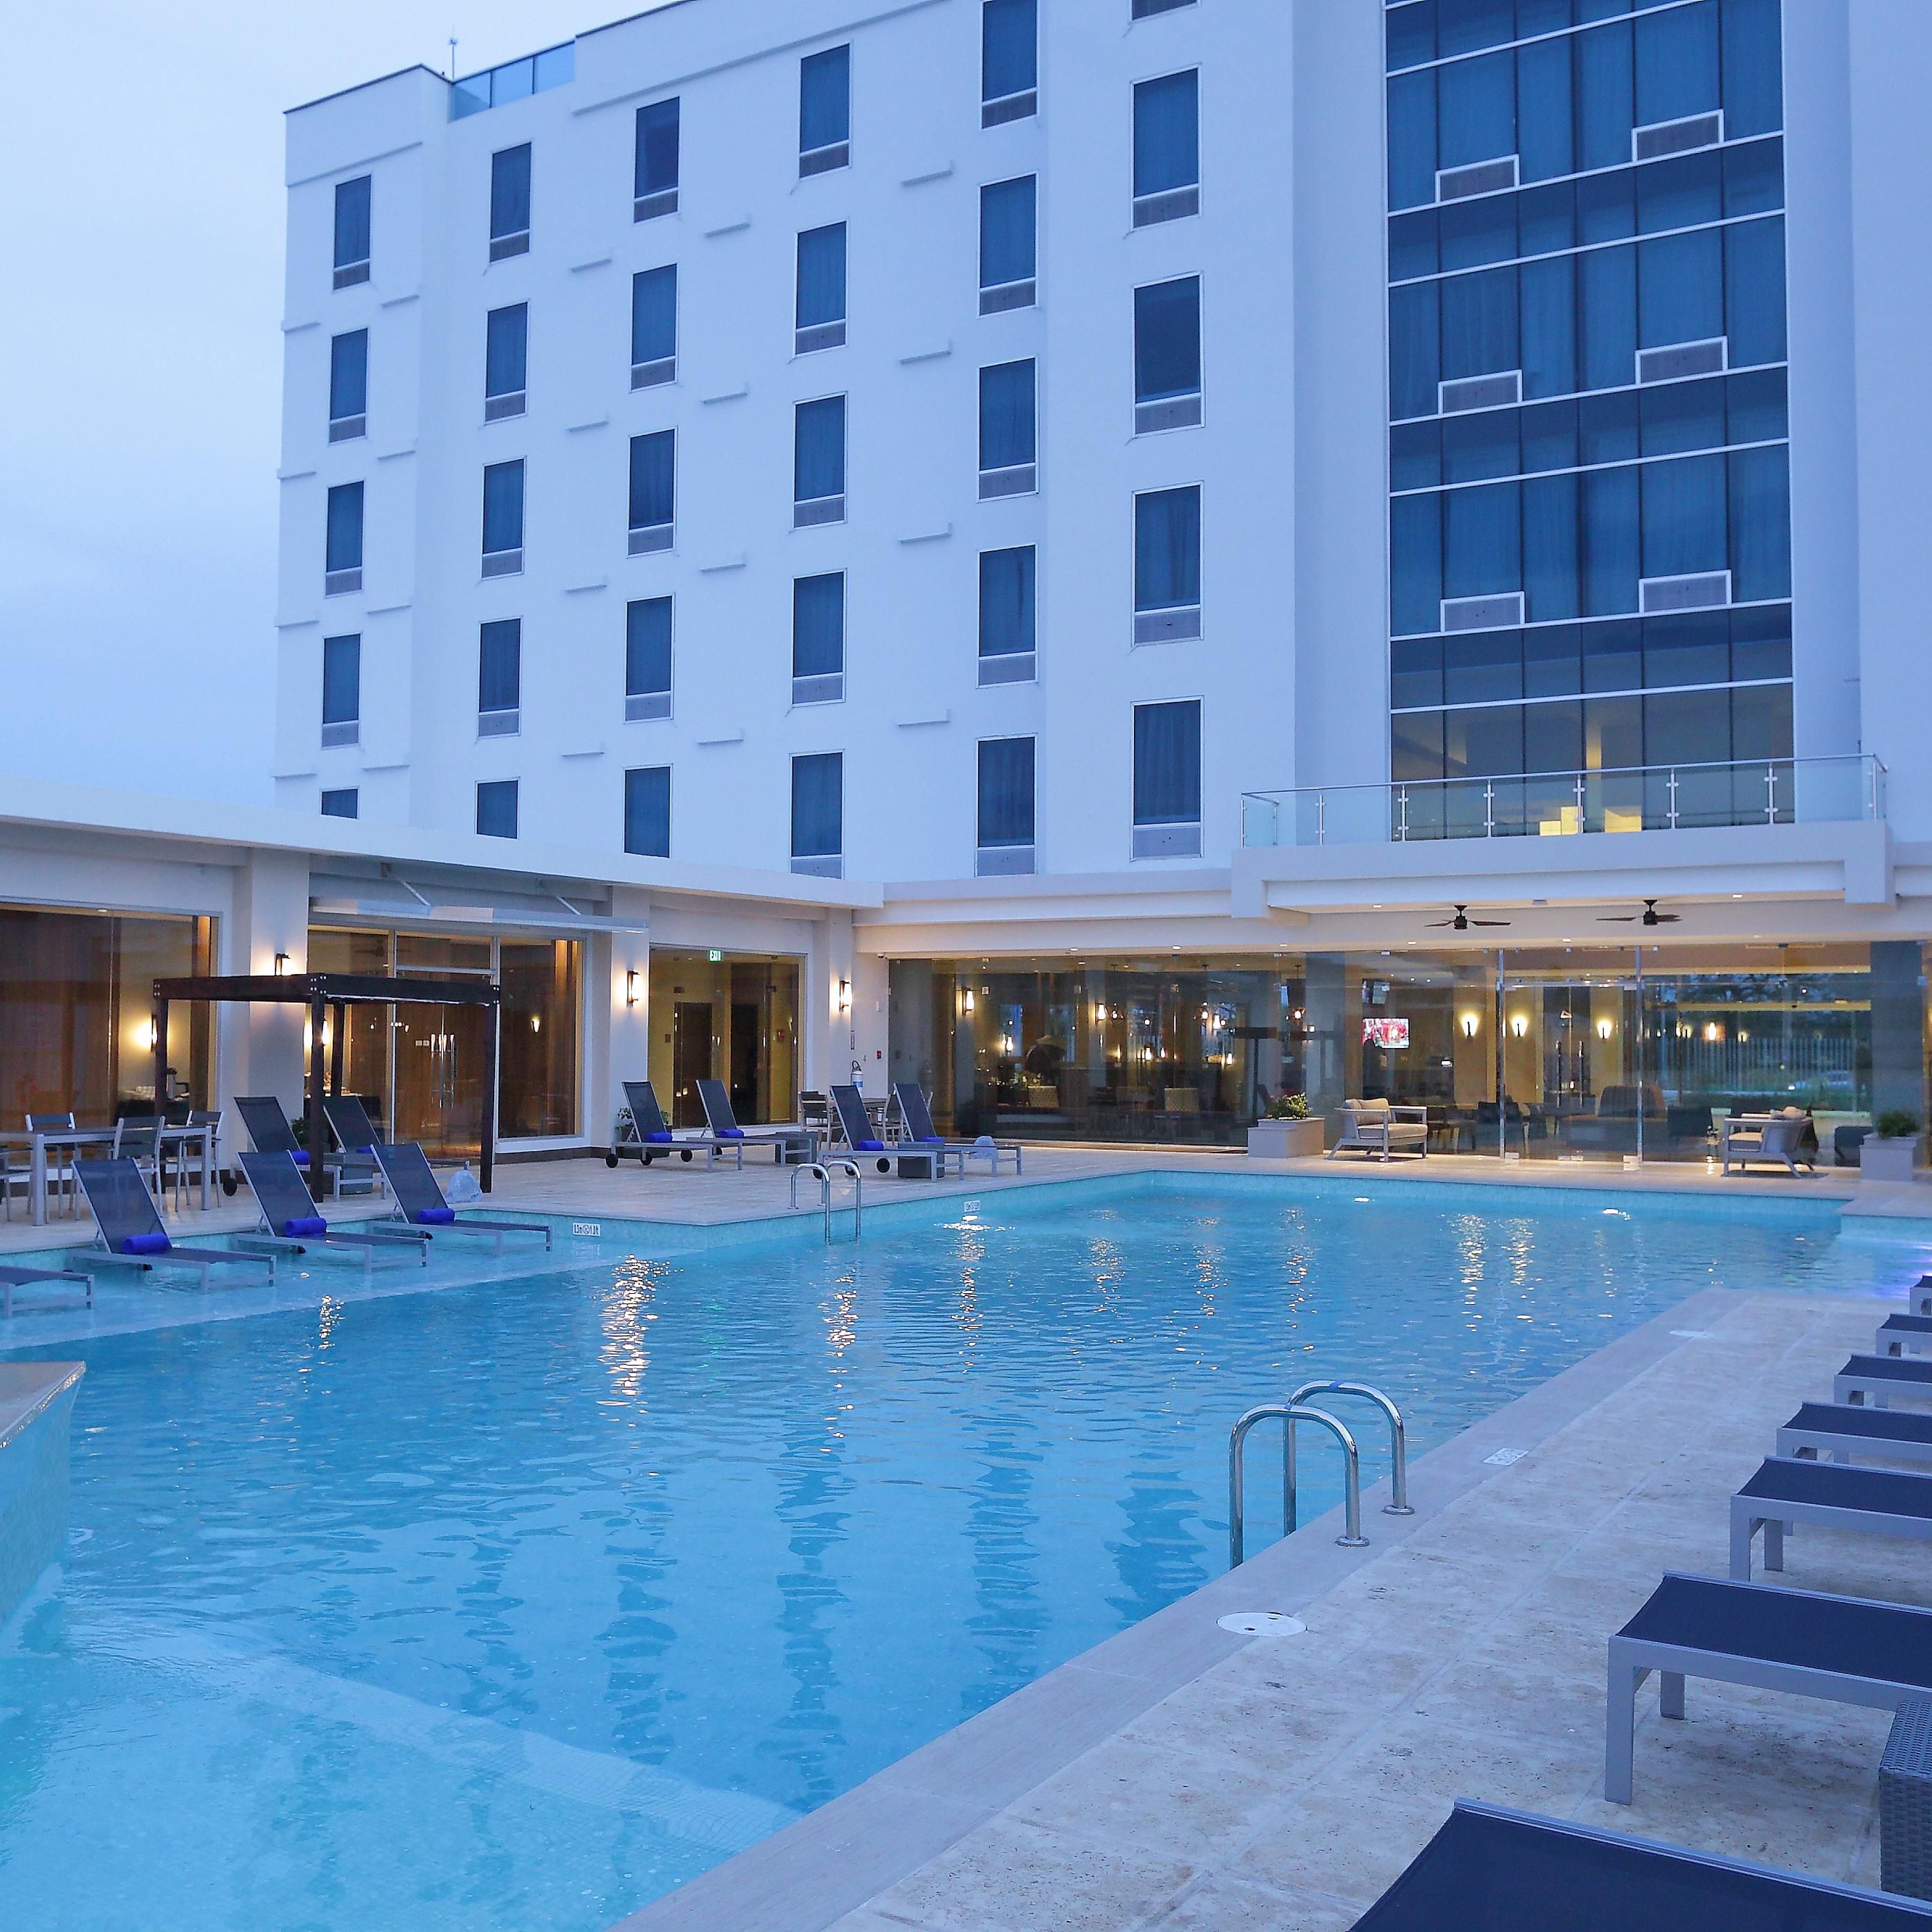 Hotelansicht Schwimbad, Hotel Crowne Plaza Panama Flughafen